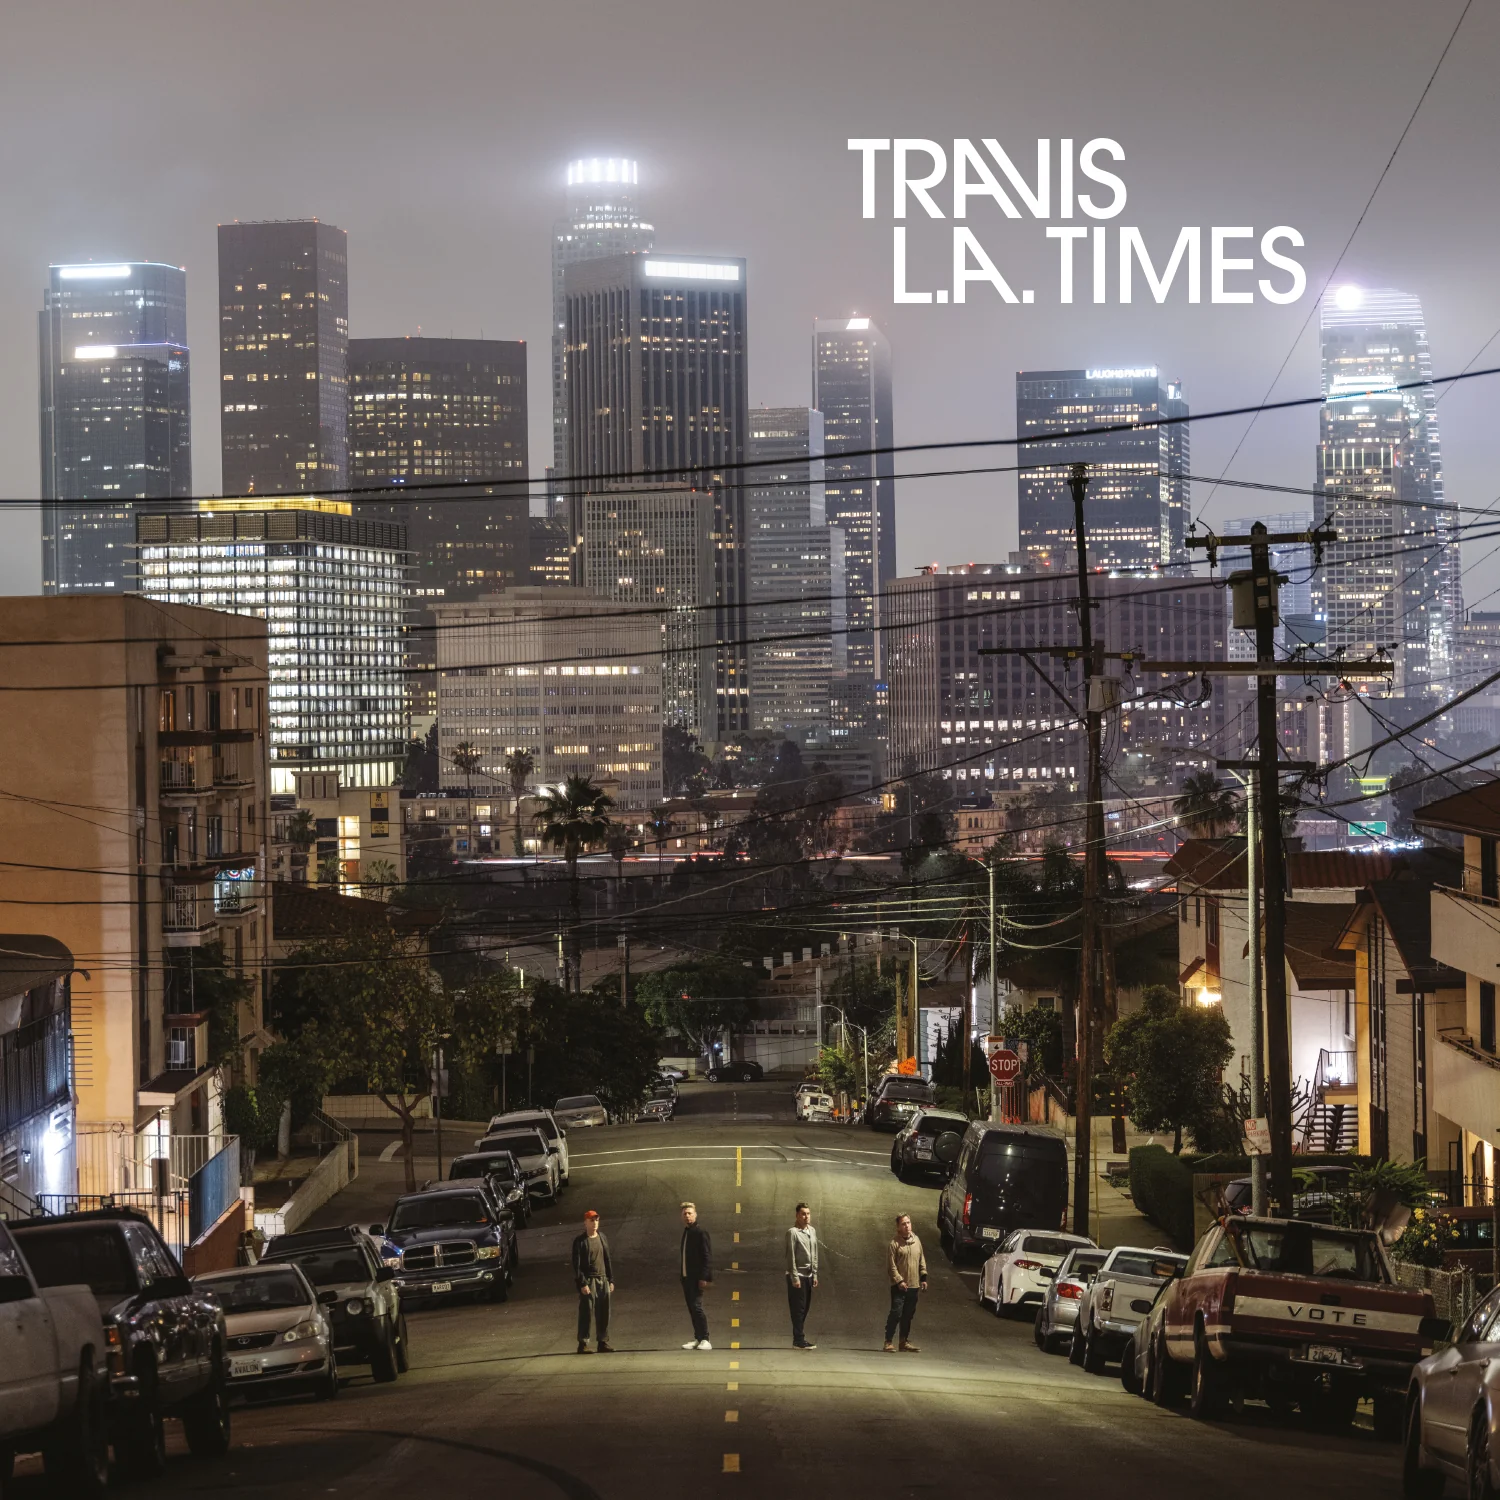 L.A. Times: Vinyl LP + Signed Print